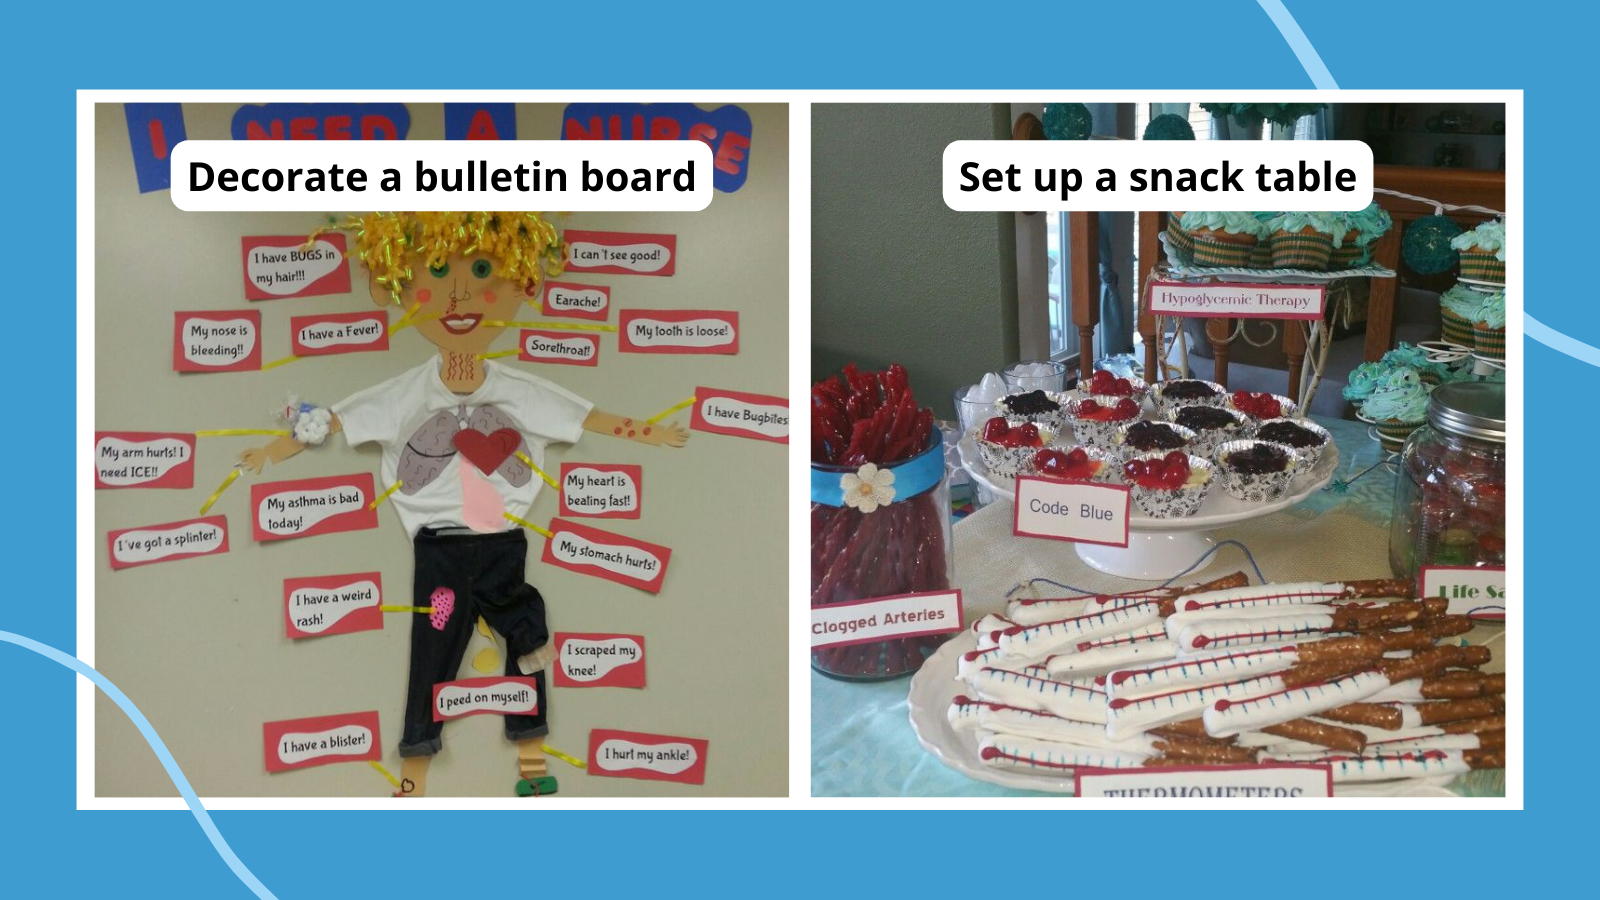 national school nurse day ideas bulletin board decortting and snack table